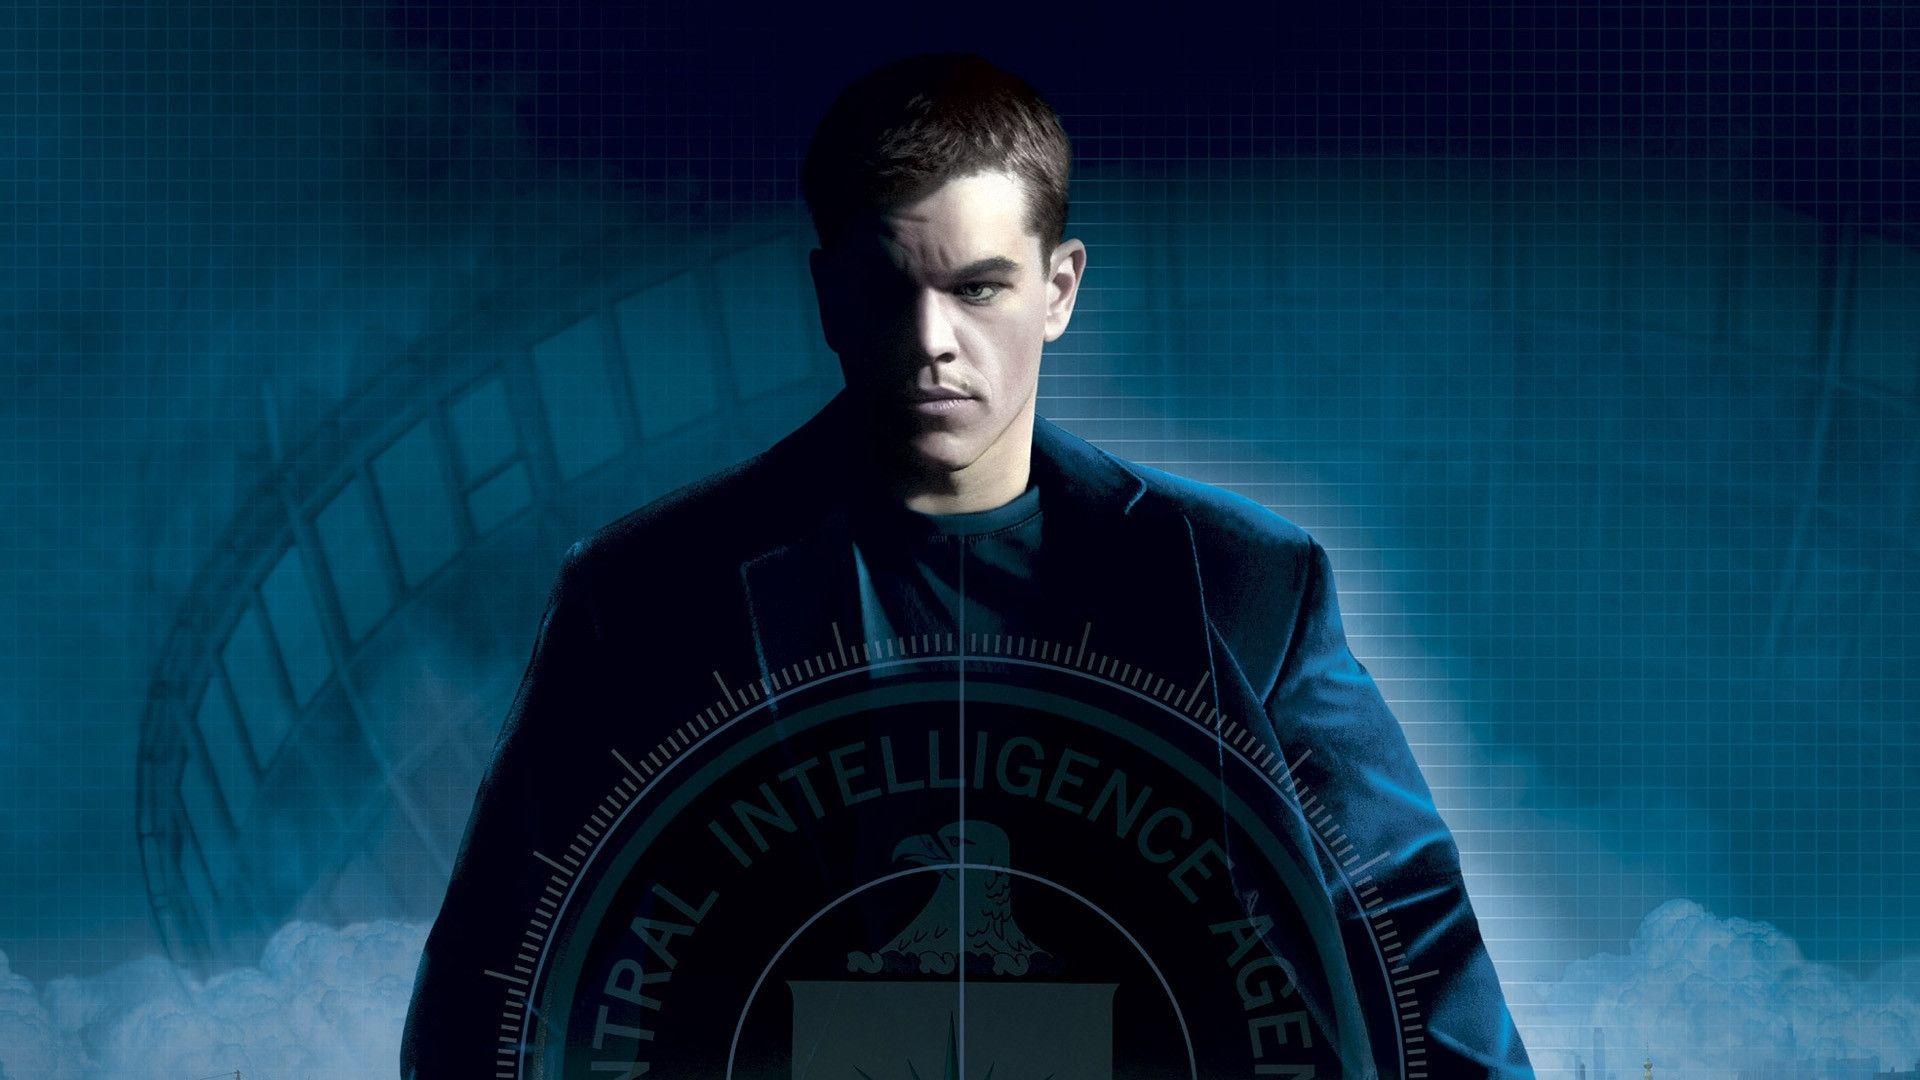 The Bourne Ultimatum Computer Wallpaper Desktop Background. Jason bourne movie, Bourne supremacy, Bourne movies